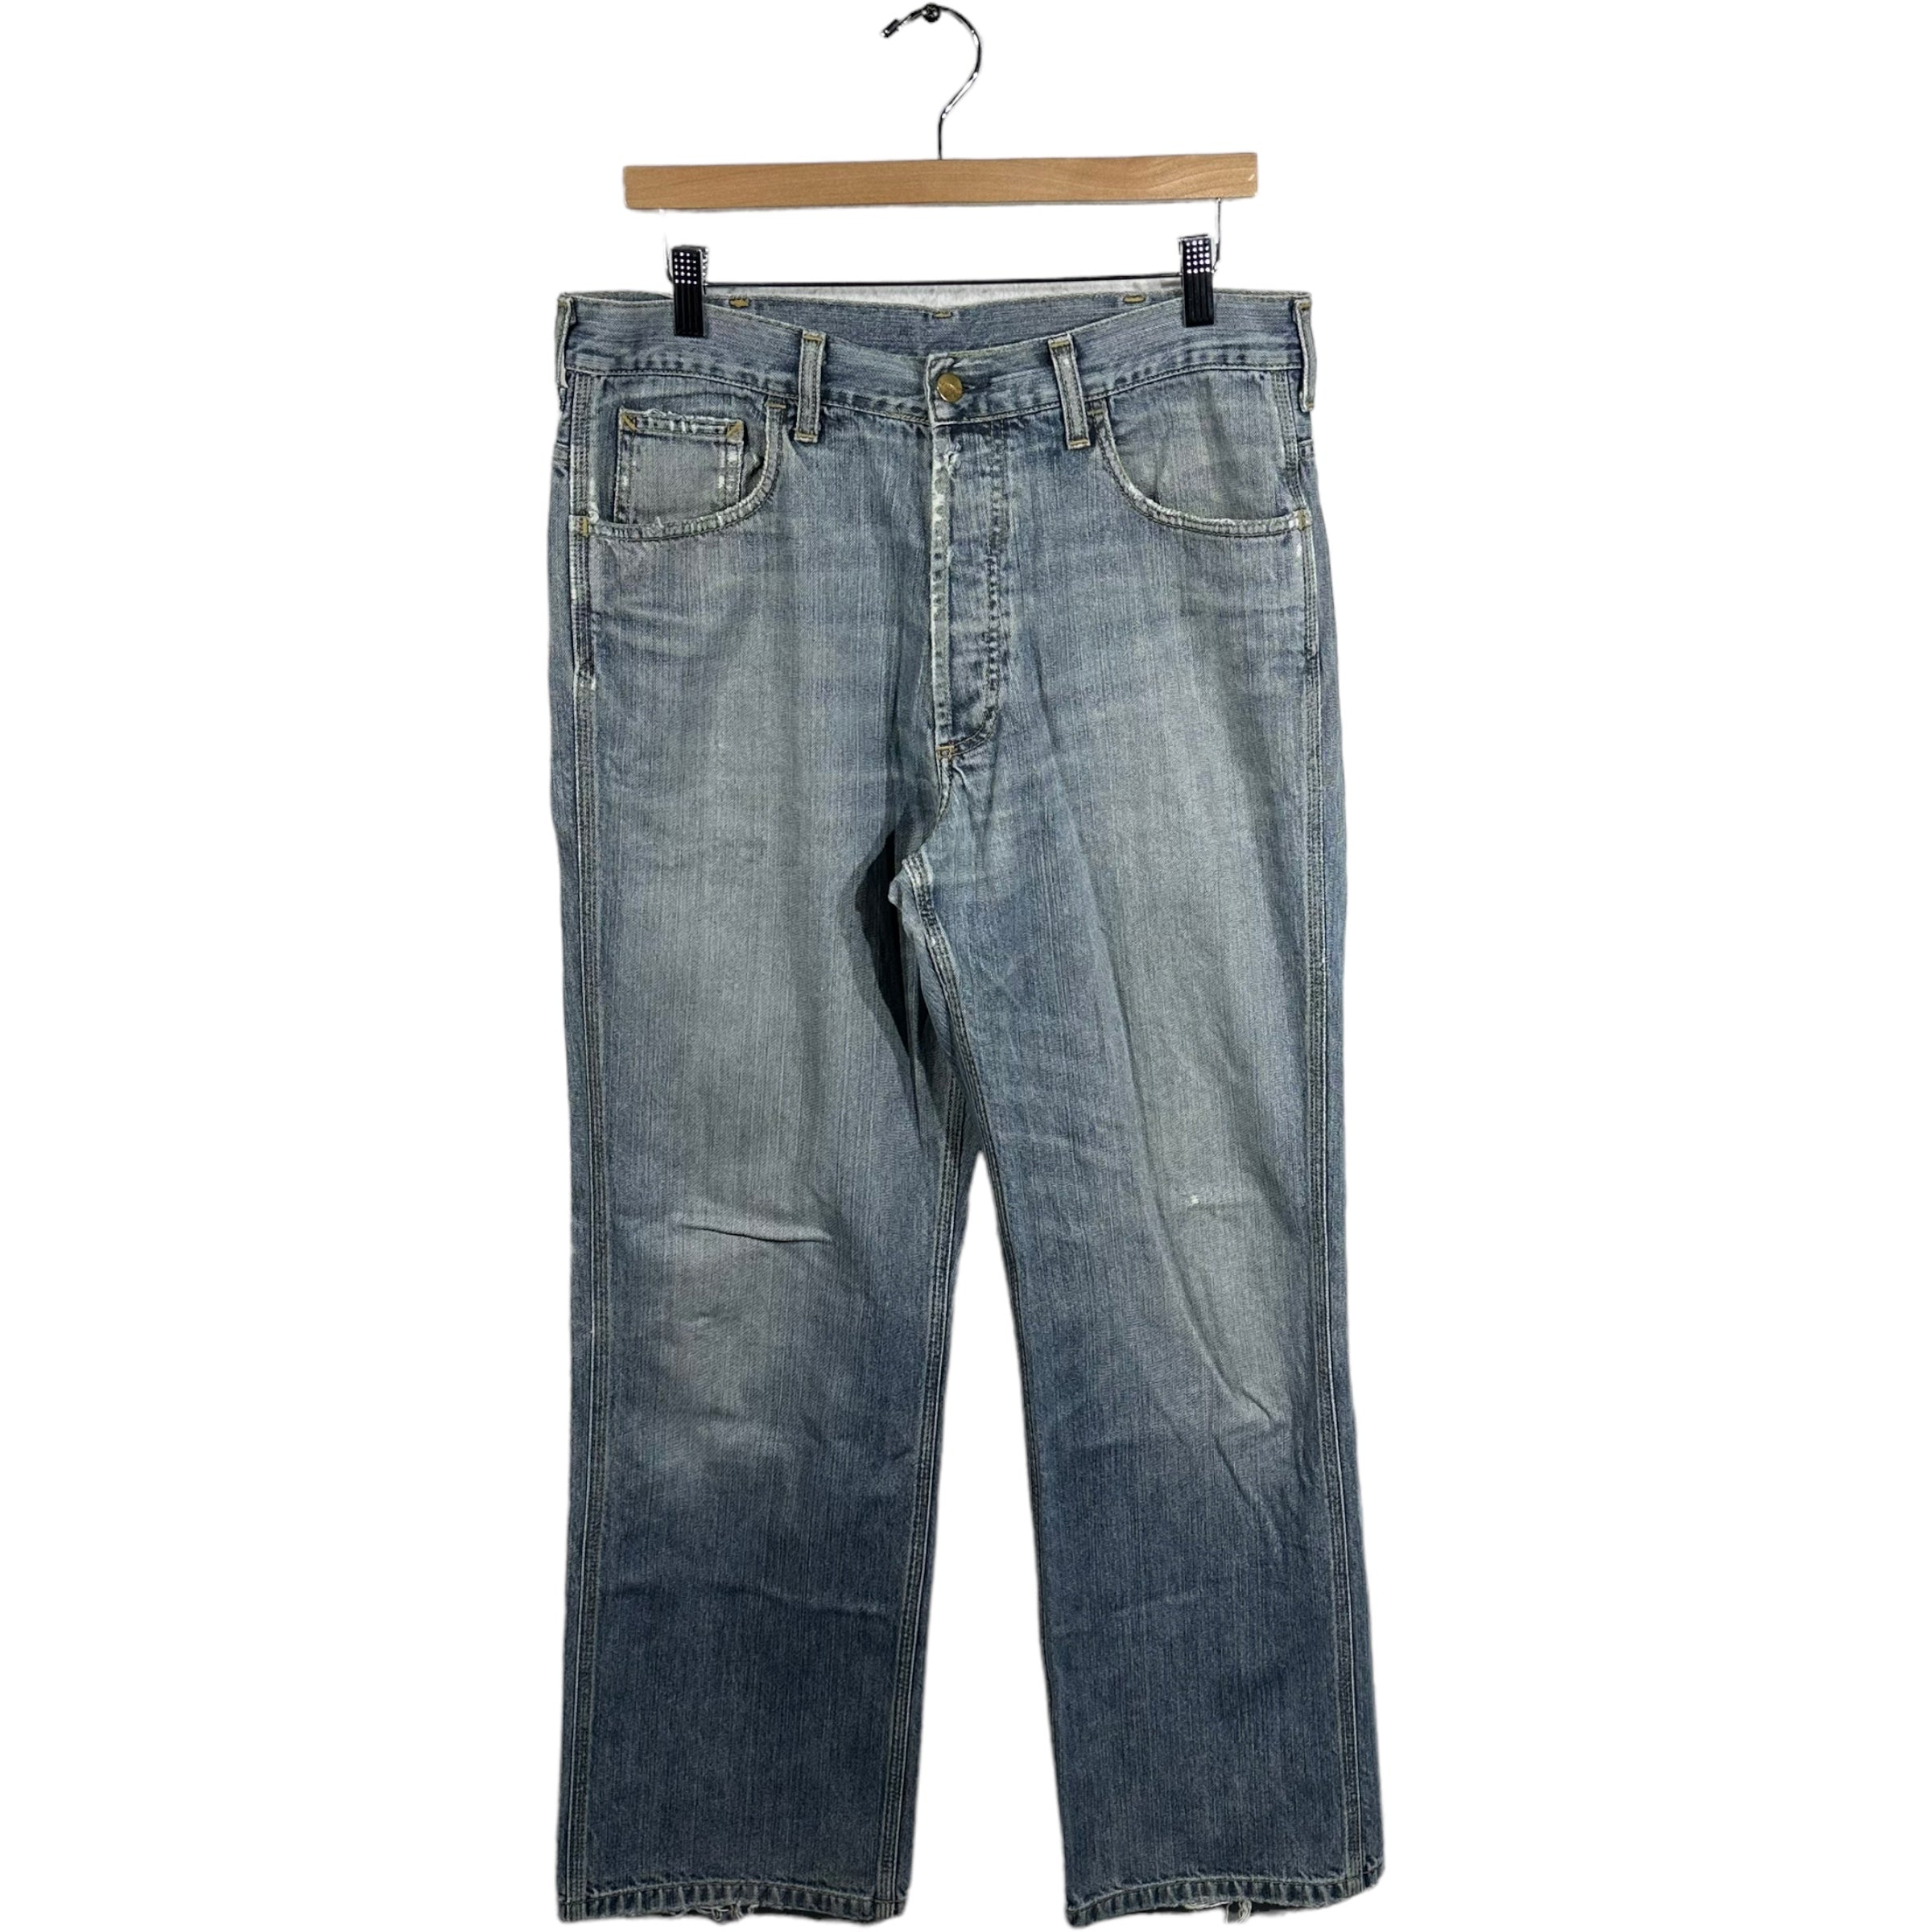 Vintage Carhartt Distressed Jeans